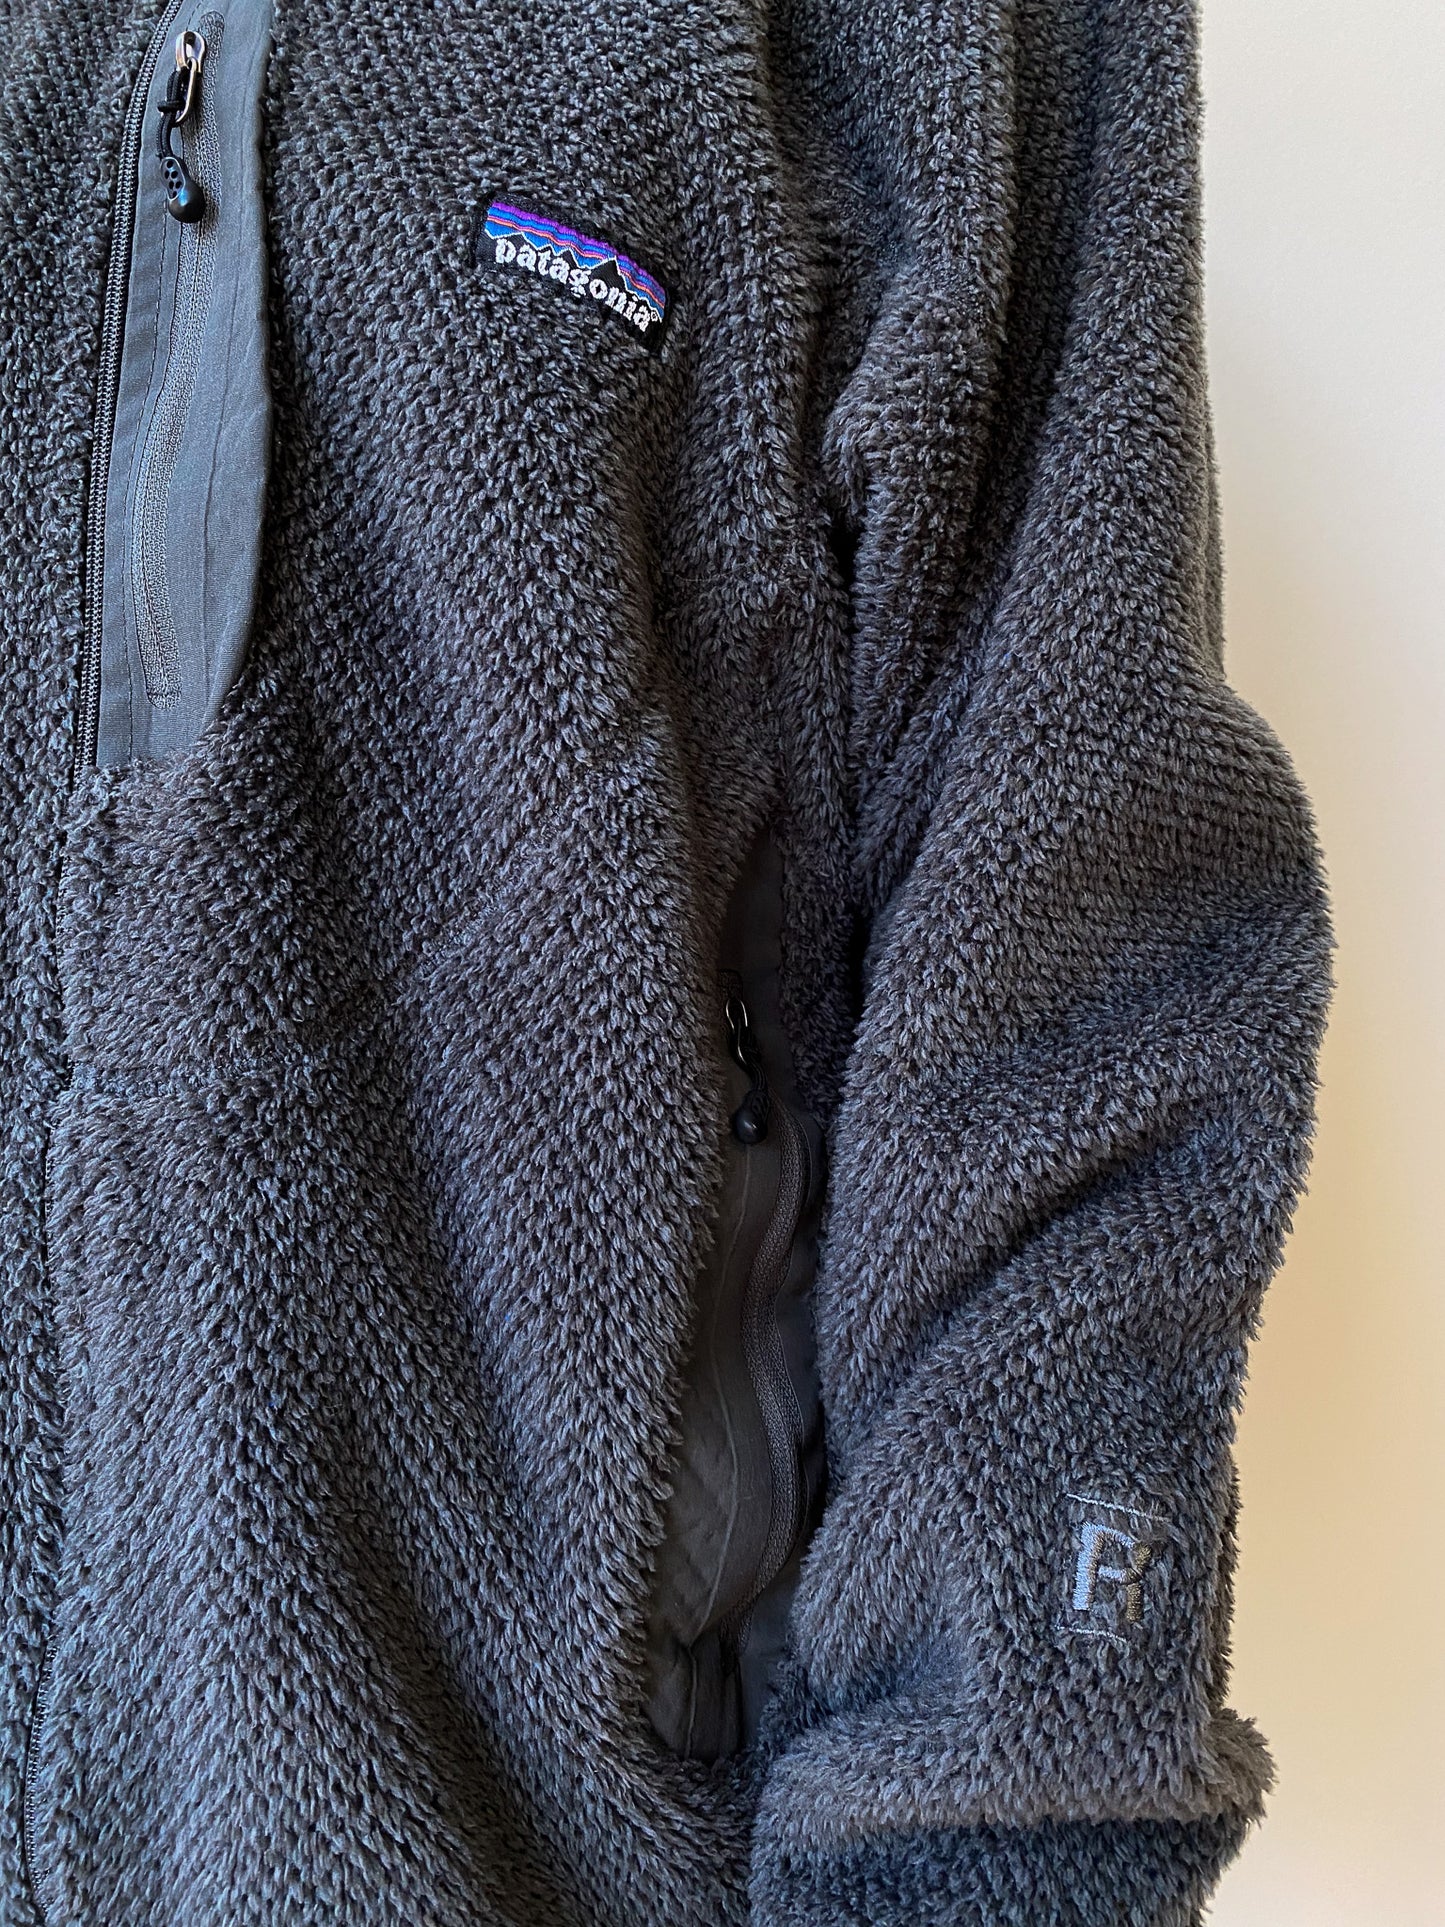 Patagonia R1 Fleece Jacket—[L]